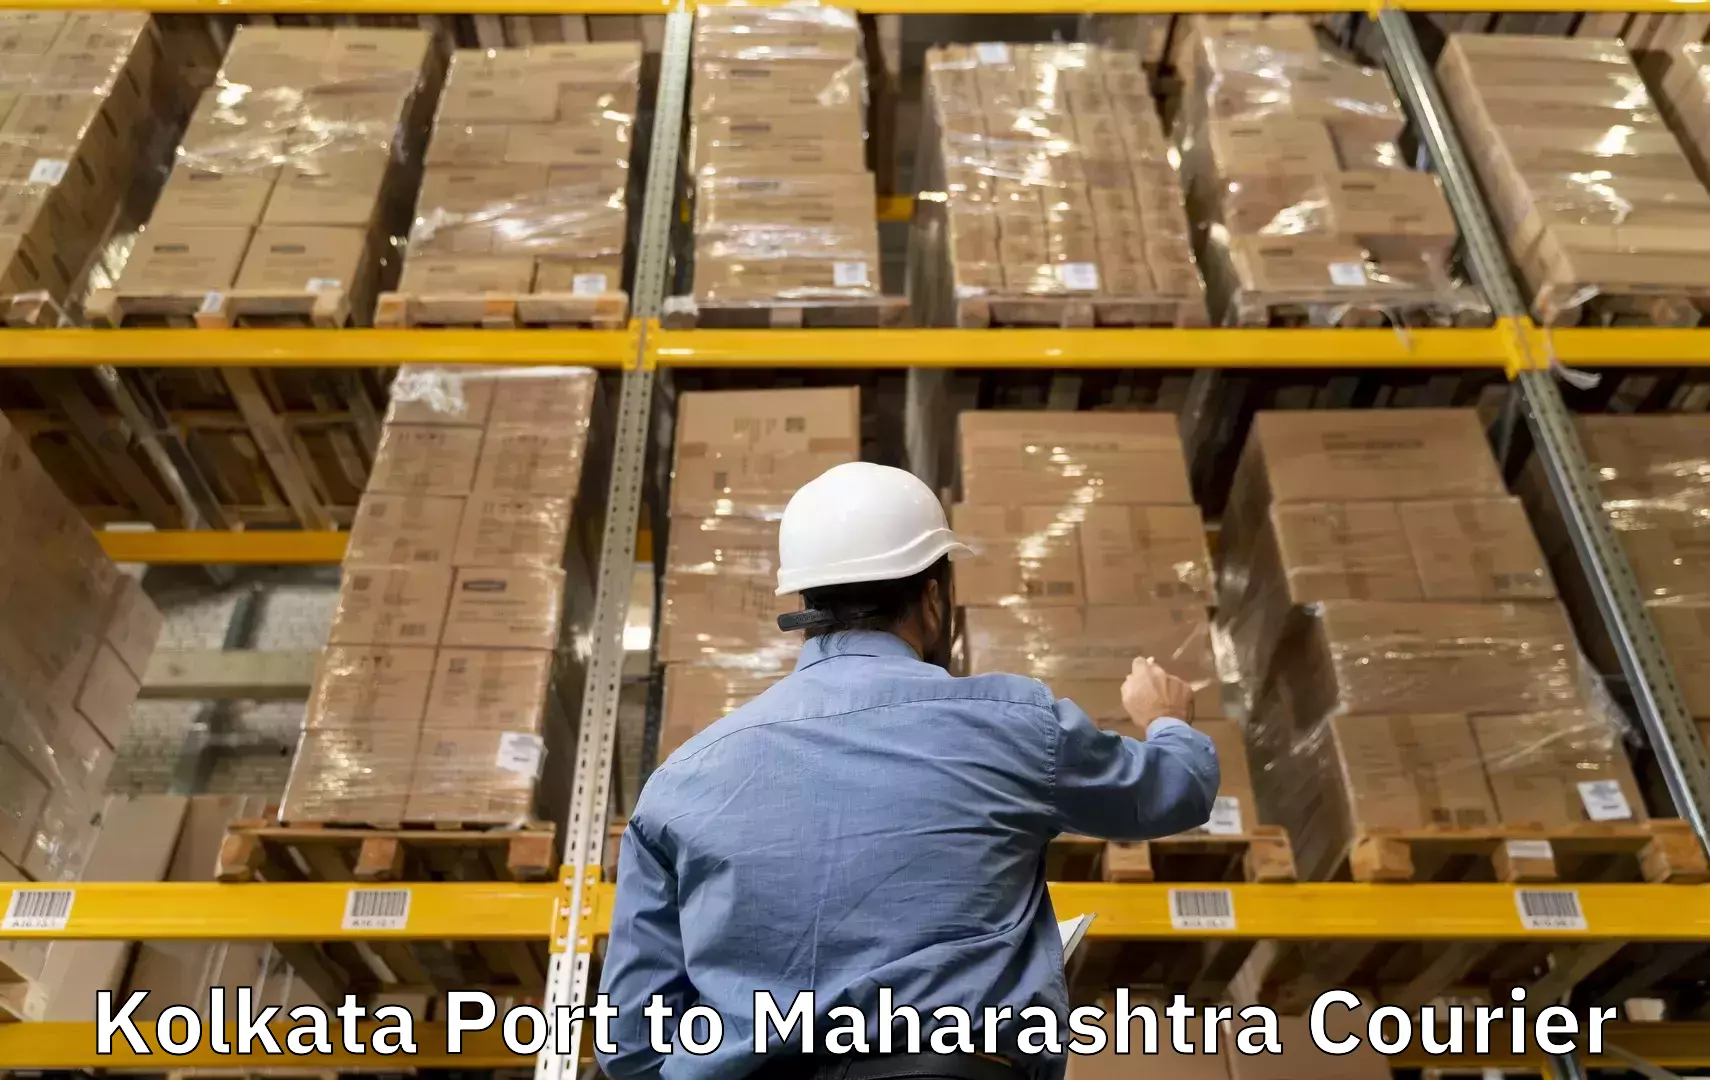 Luggage delivery network Kolkata Port to Rajgurunagar